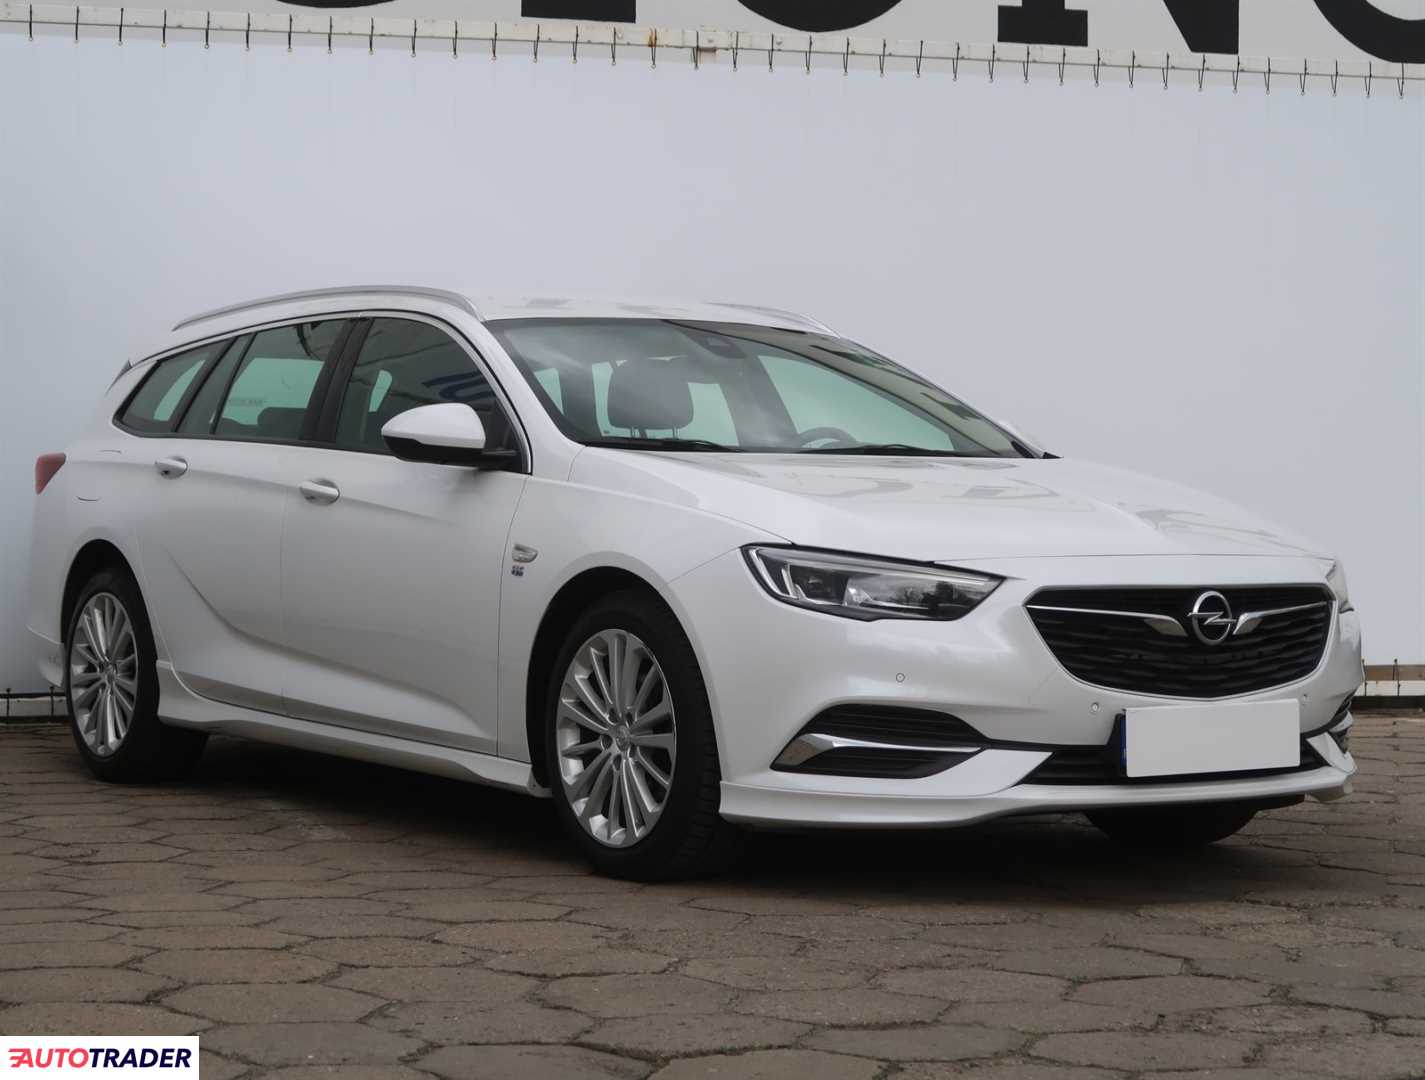 Opel Insignia 2019 1.5 162 KM